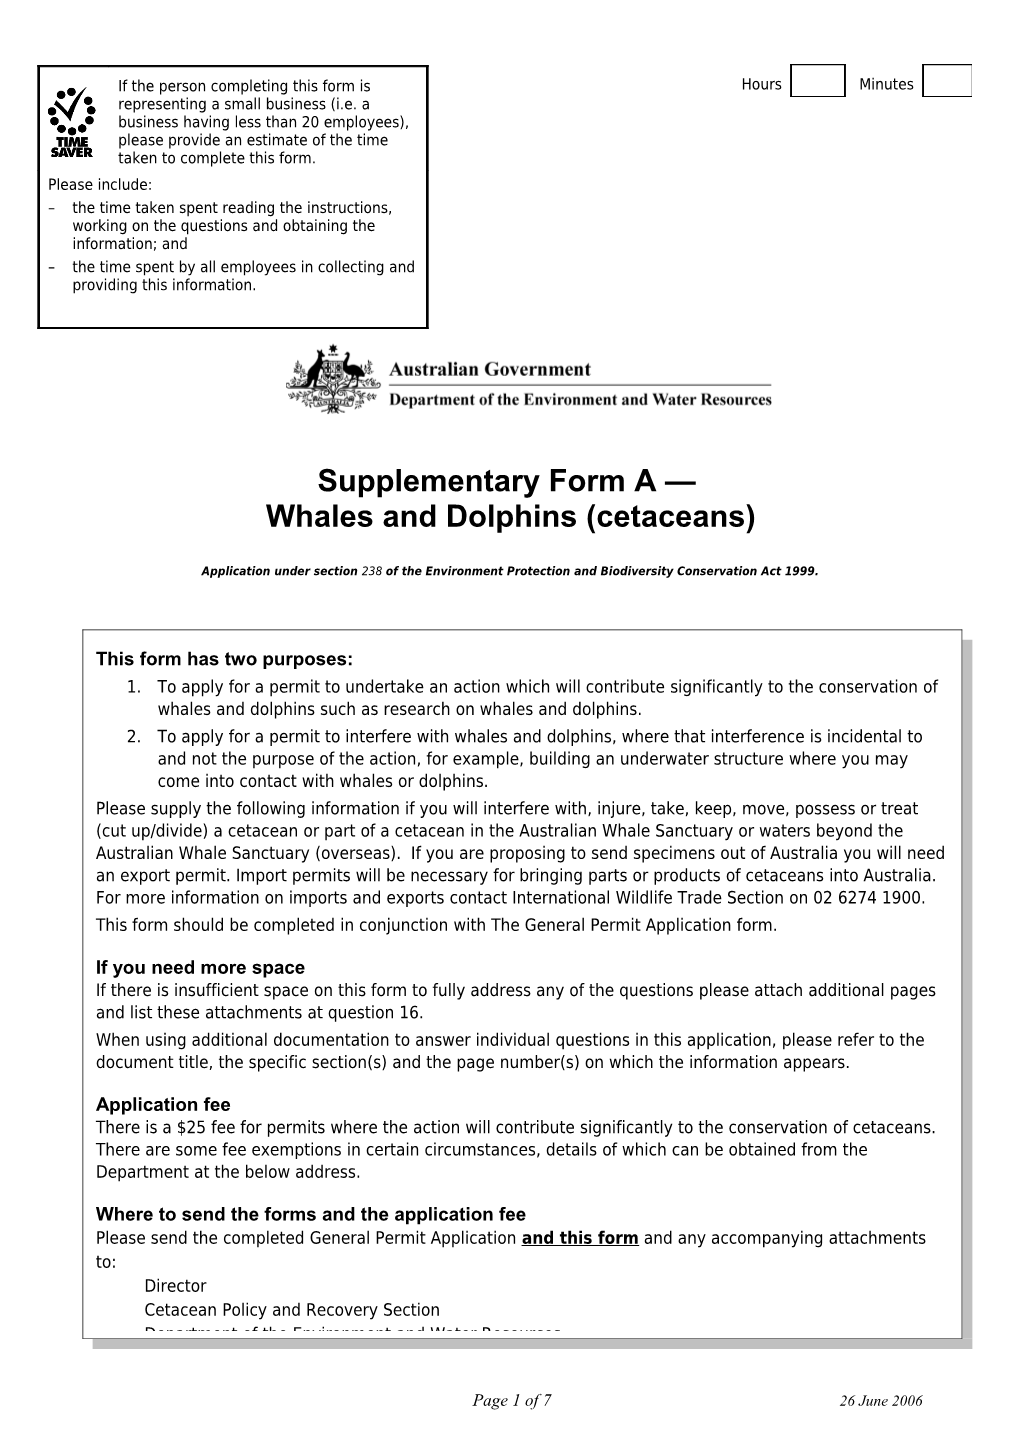 Cetacean Permit Application C2012-0004 - Supplementary Form A